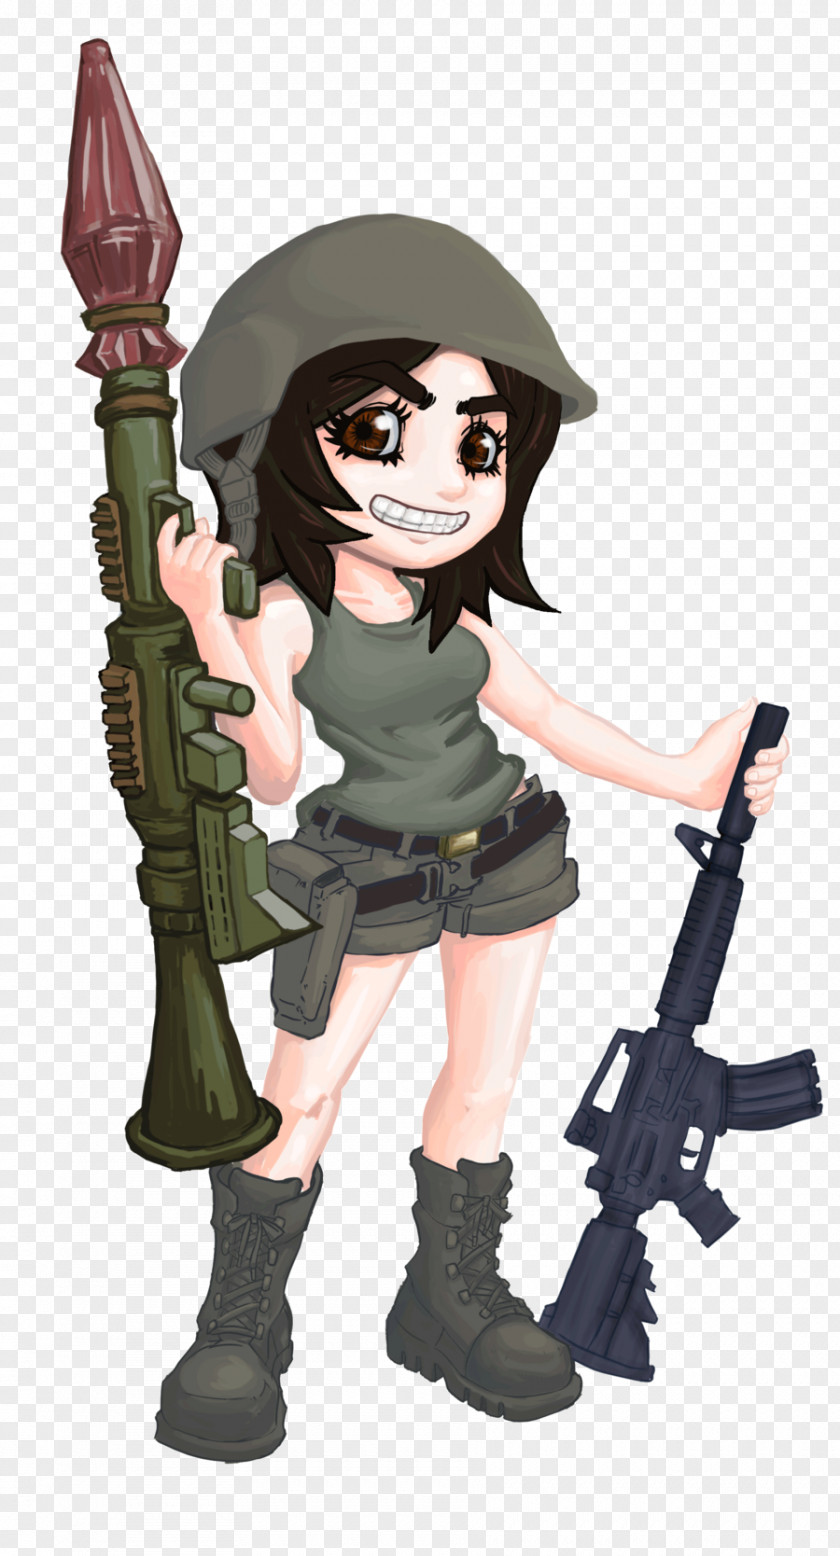 Frog Armed Soldier Infantry Mercenary Cartoon PNG